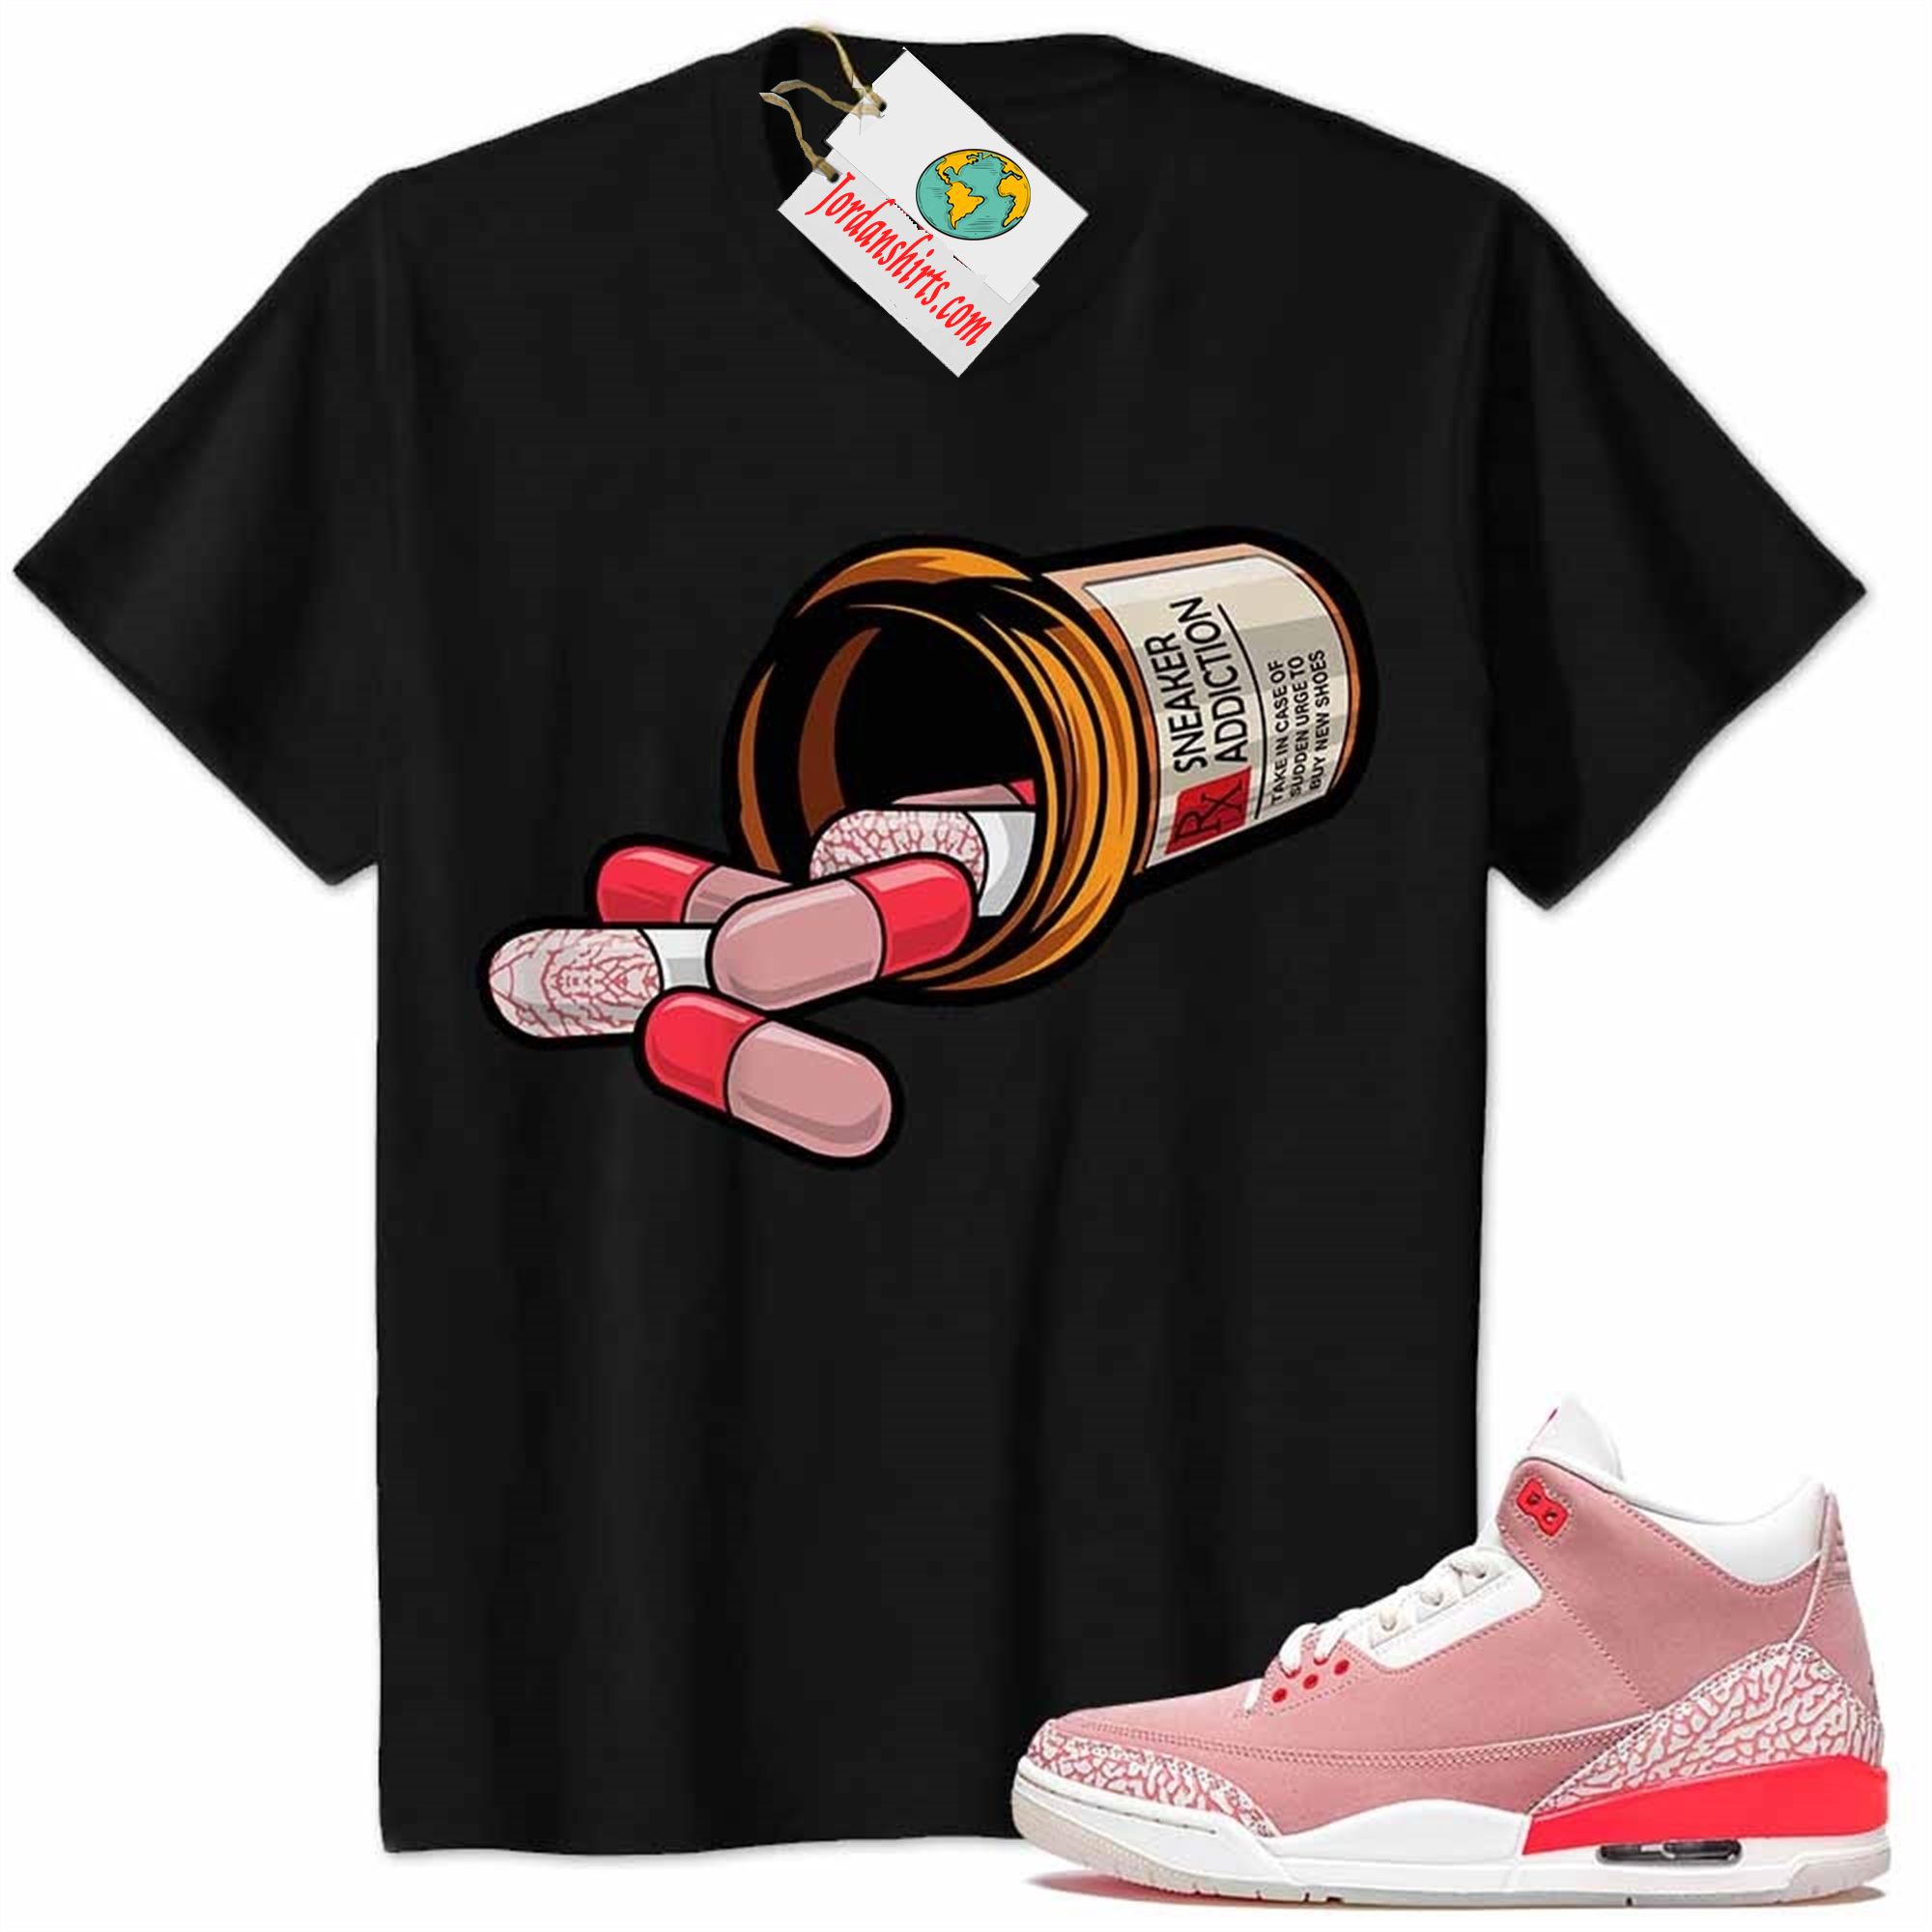 Jordan 3 Shirt, Rx Drugs Pill Bottle Sneaker Addiction Black Air Jordan 3 Rust Pink 3s Plus Size Up To 5xl